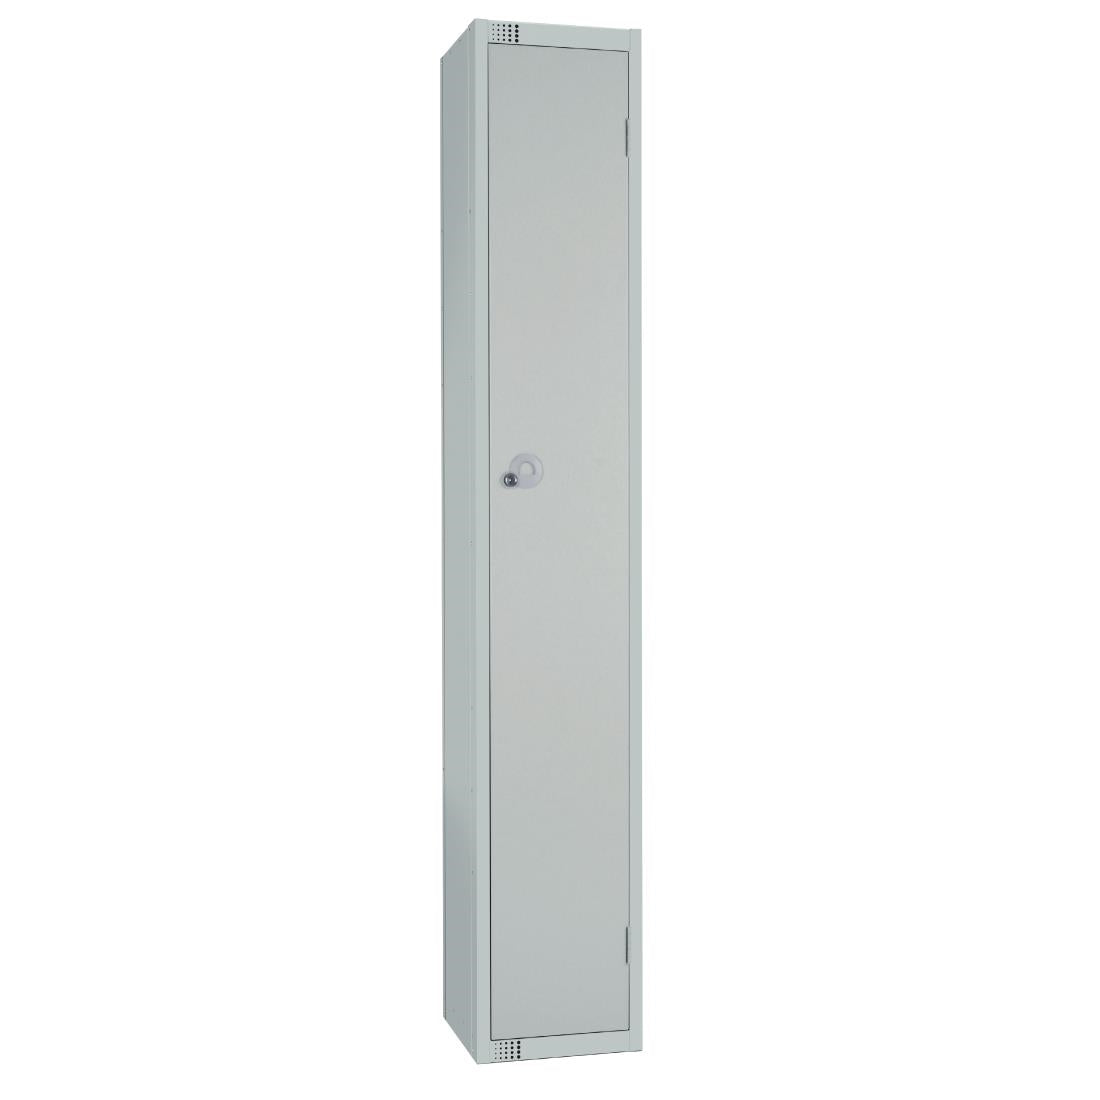 W929-CL Elite Single Door Manual Combination Locker Locker Grey